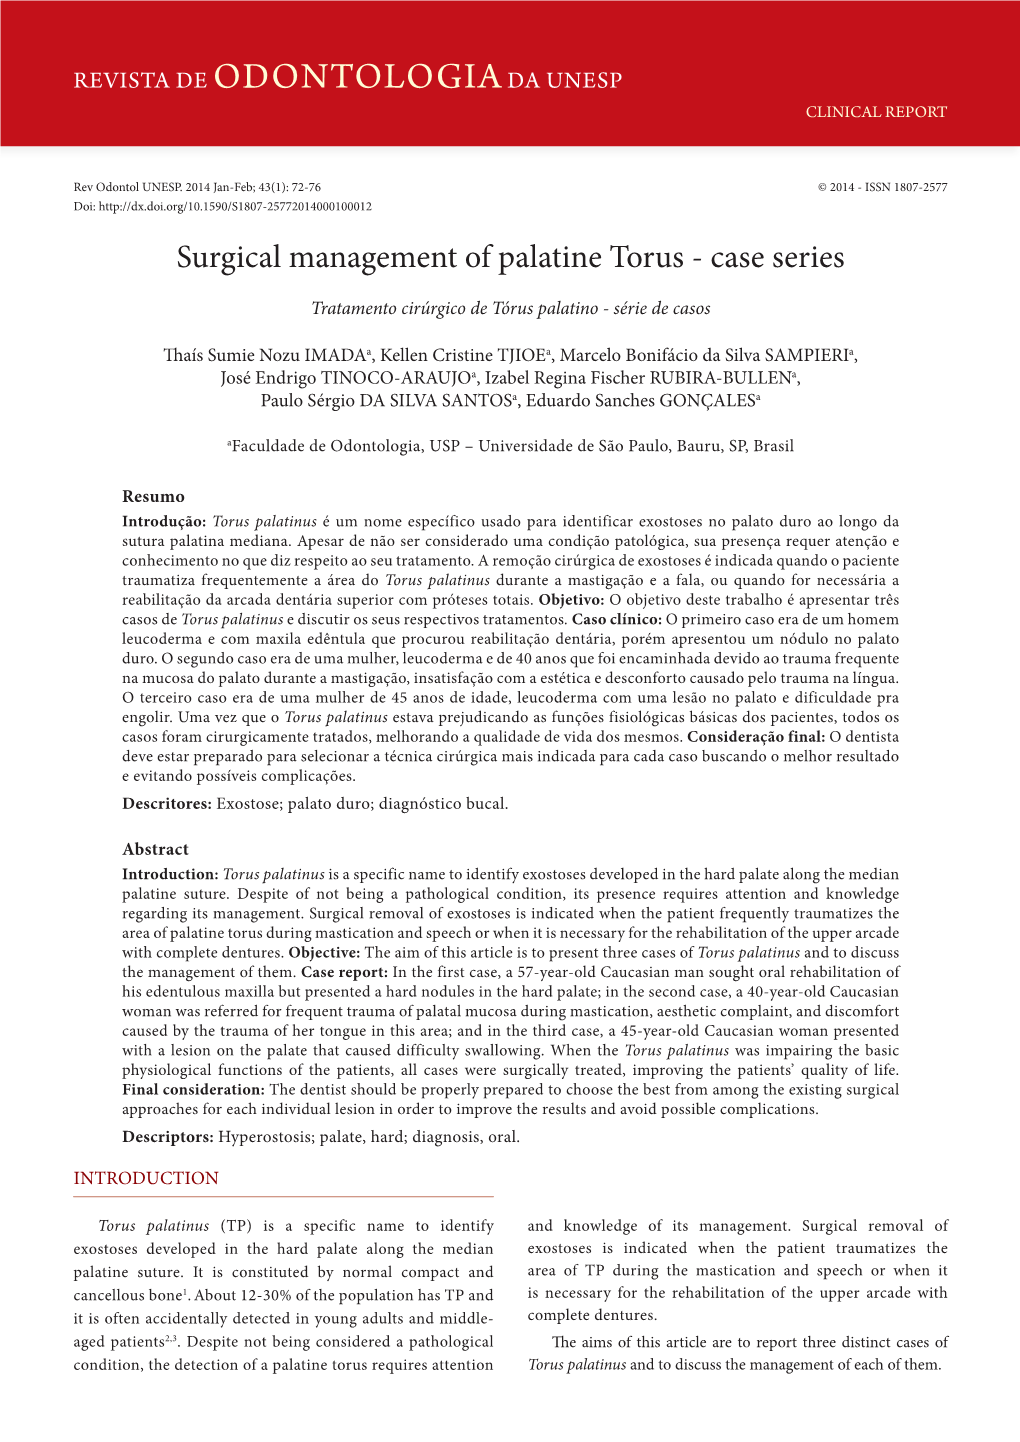 Surgical Management of Palatine Torus - Case Series